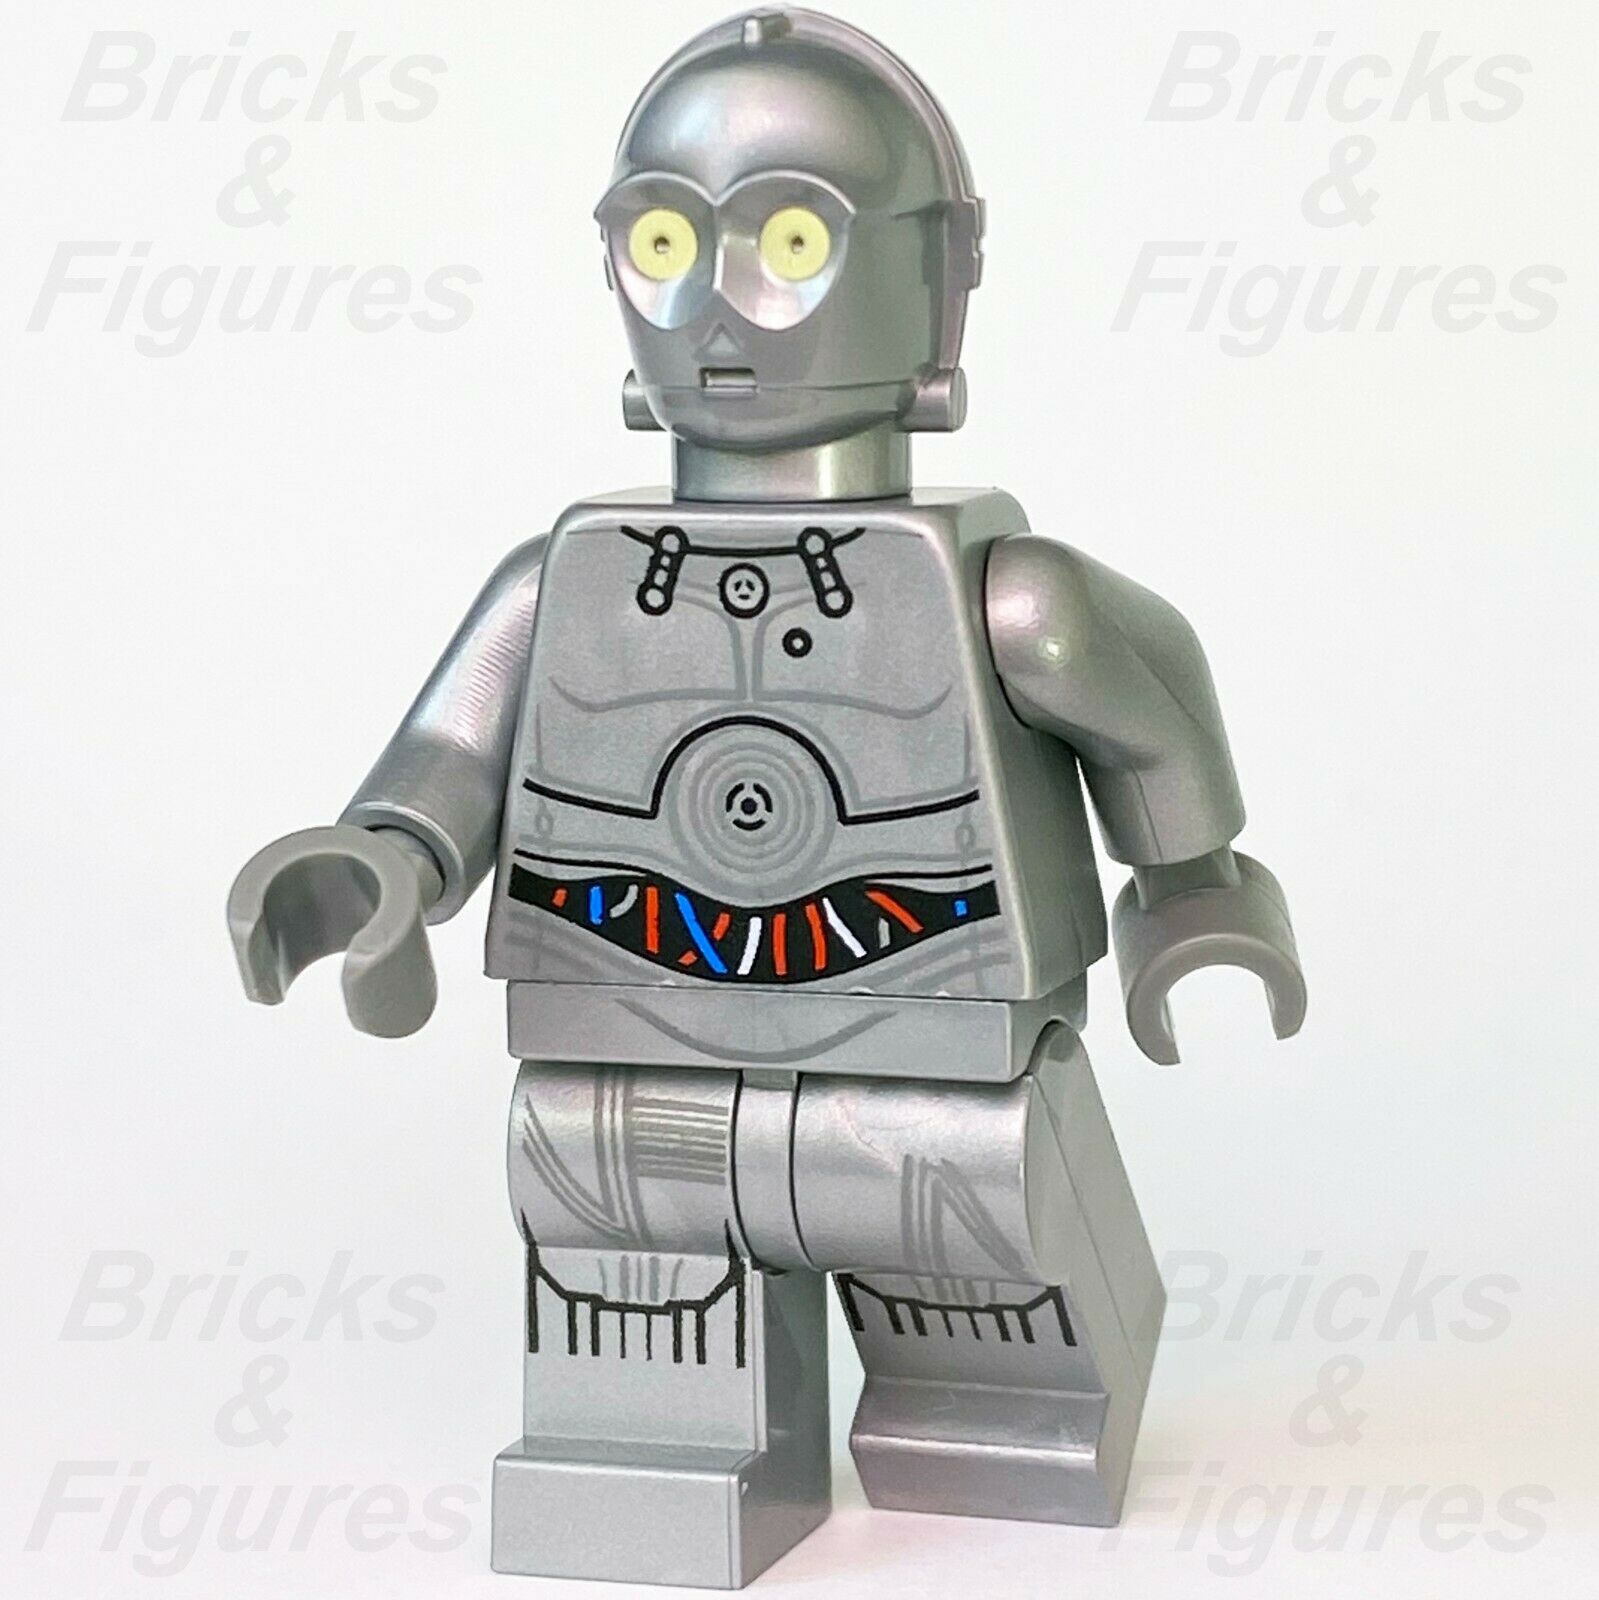 New Star Wars LEGO U-3PO Silver Protocol Droid A New Hope Minifigure 75146 - Bricks & Figures